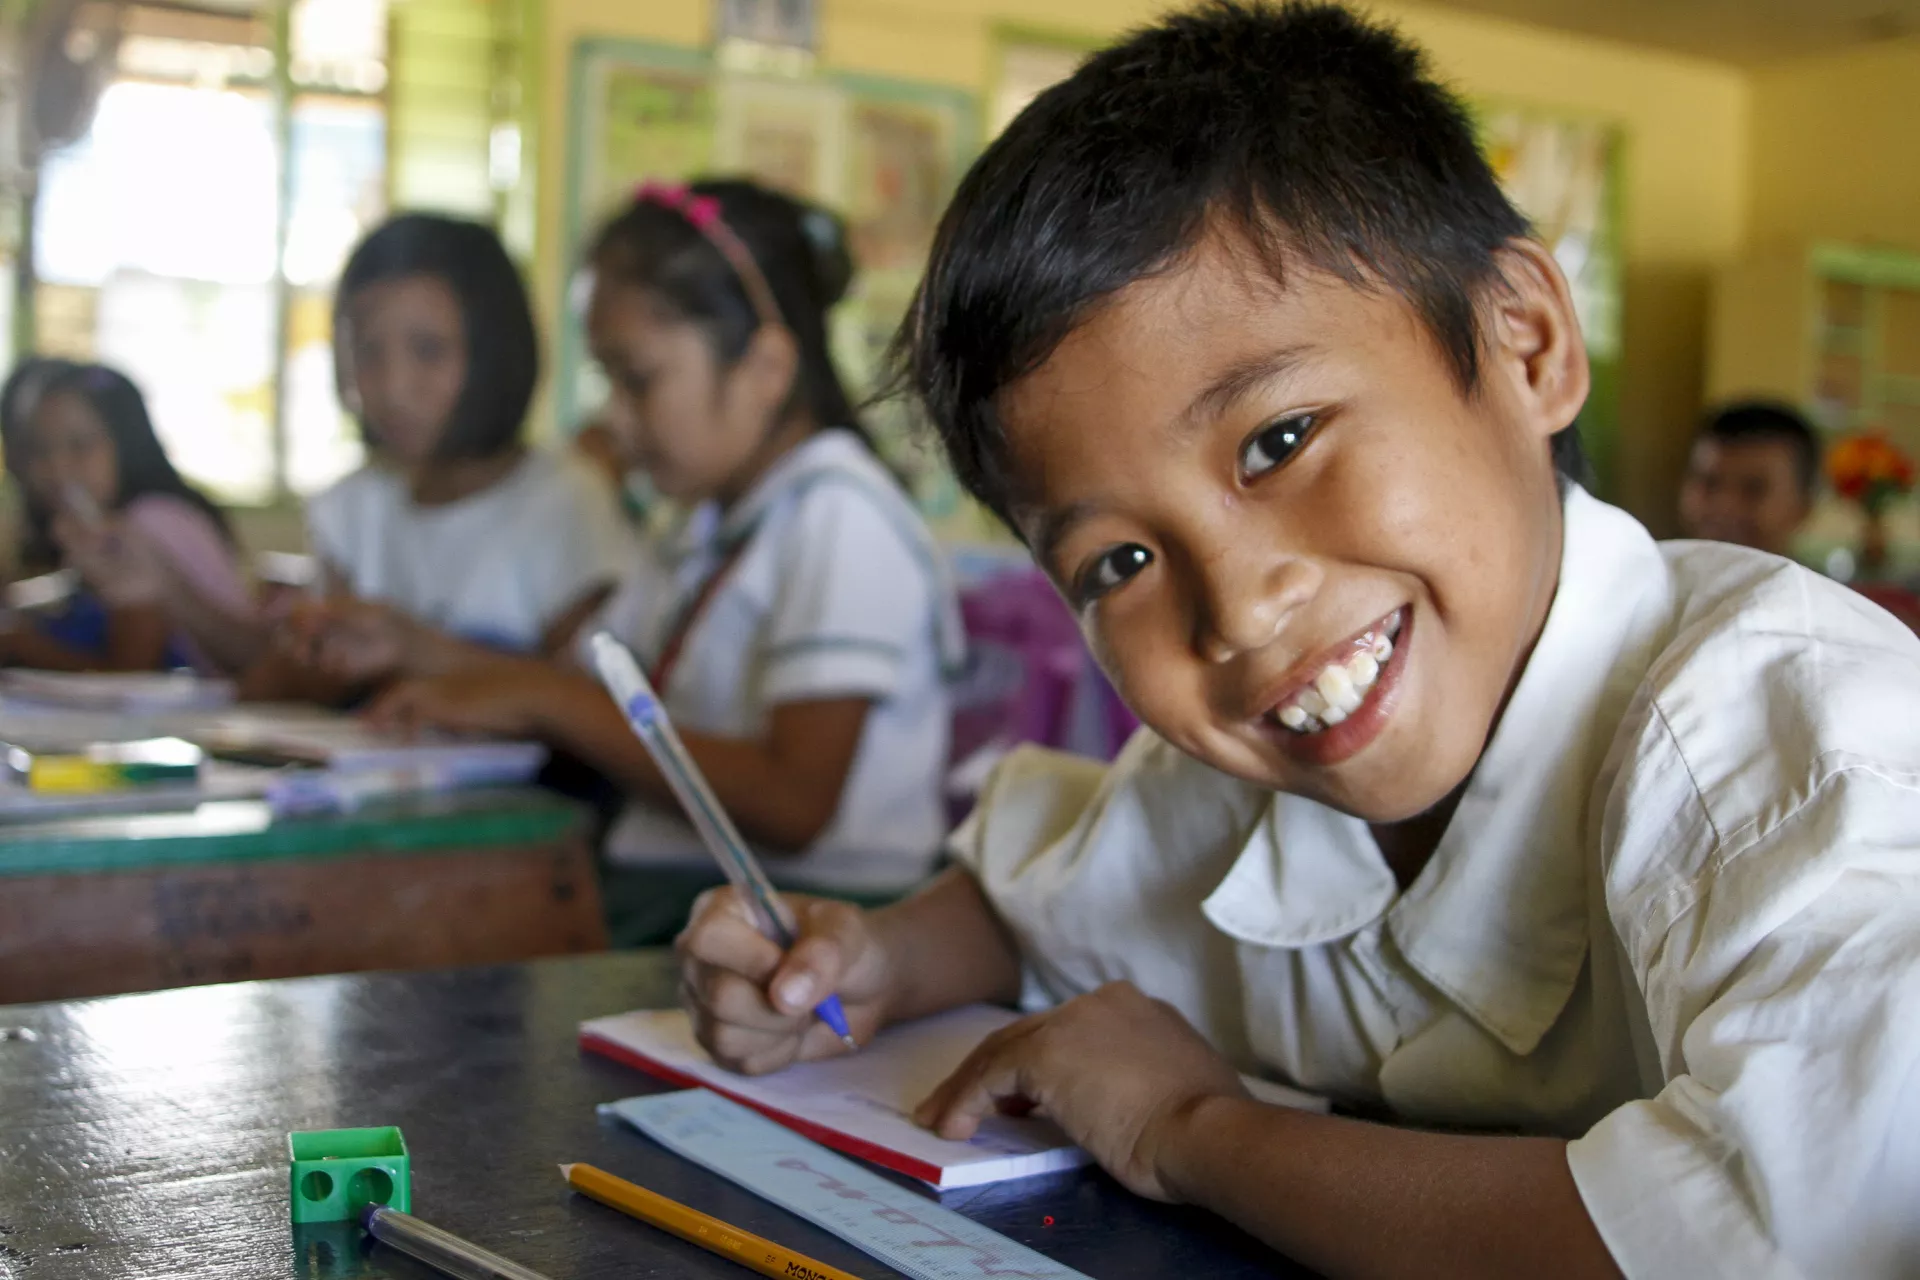 A boy smiles as he writes in class